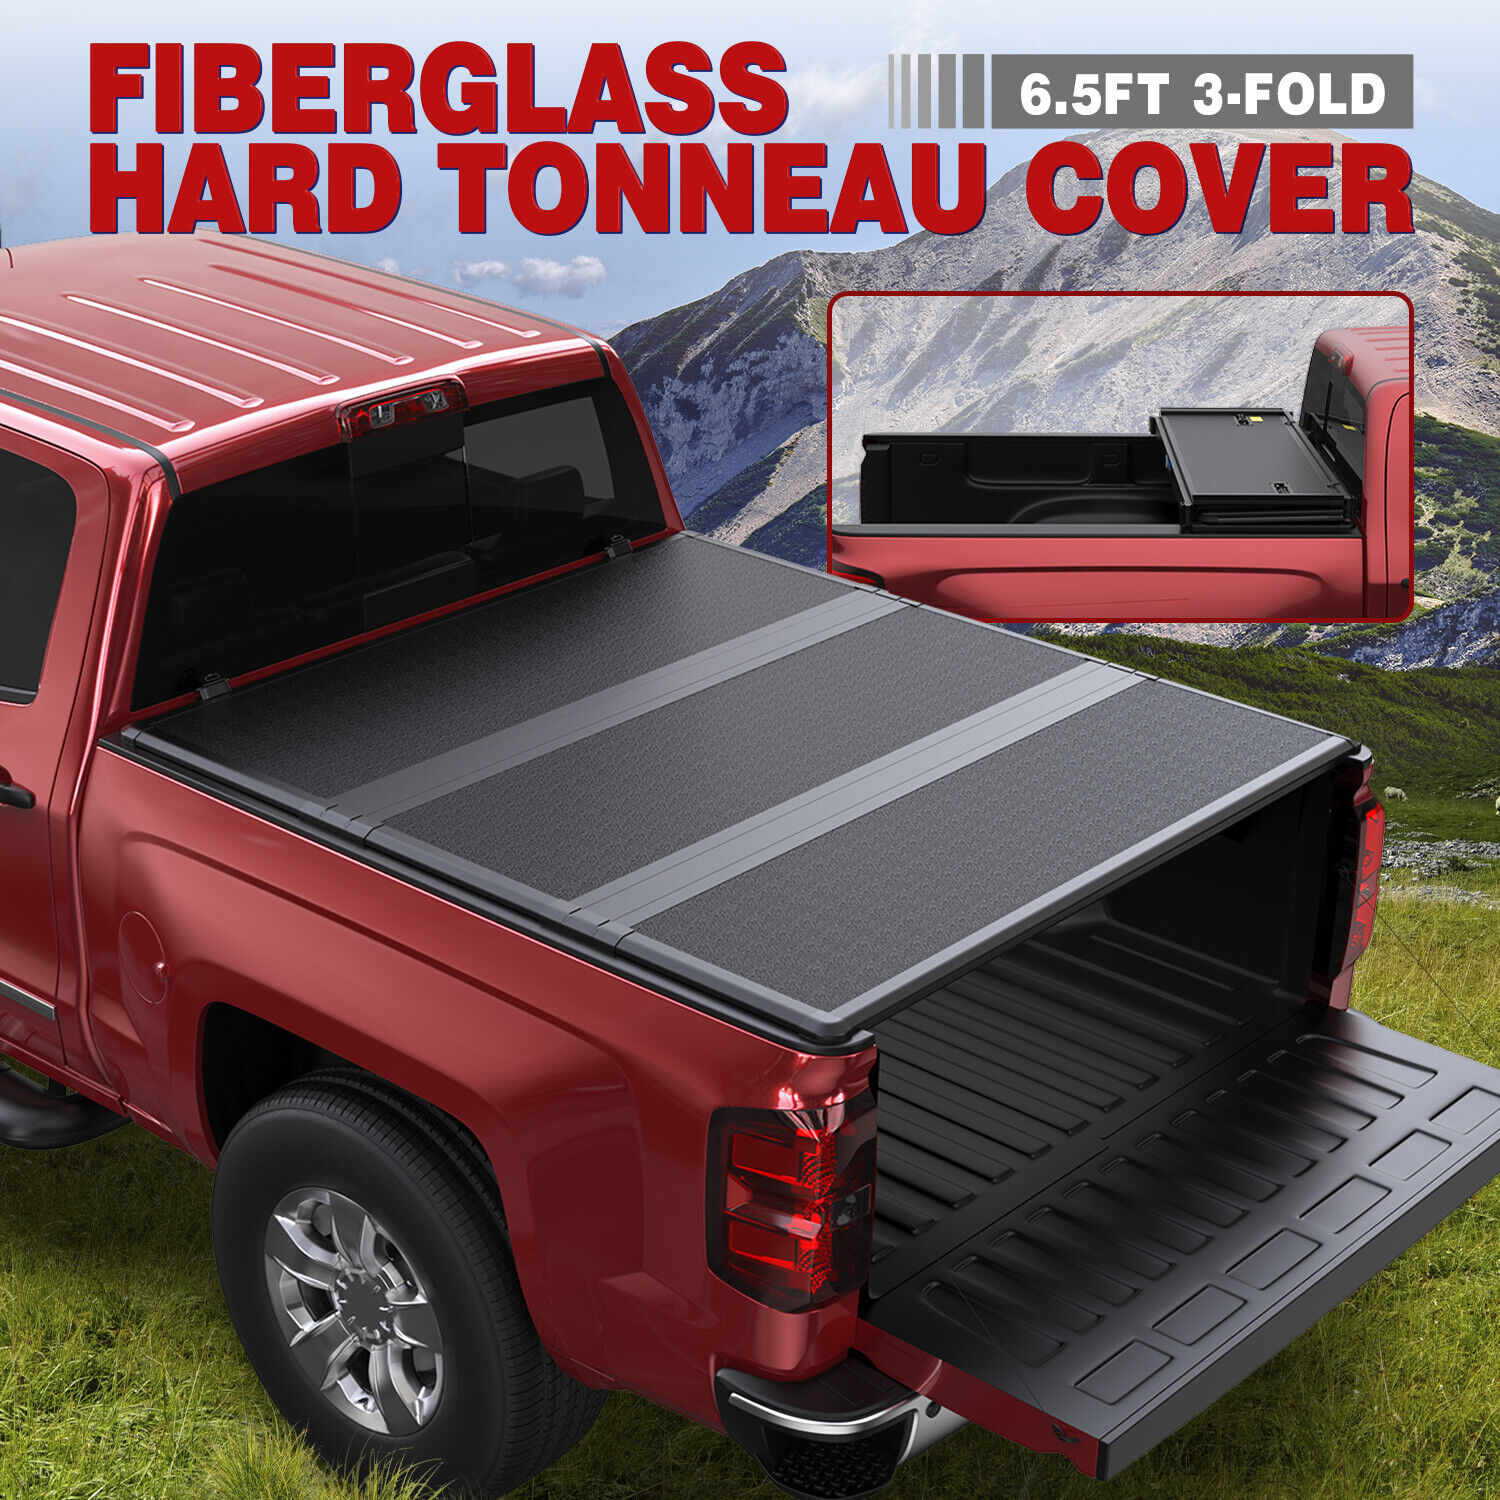 6.5FT 3-Fold Fiberglass Hard Tonneau Cover For 2016-21 Nissan Titan XD Truck Bed